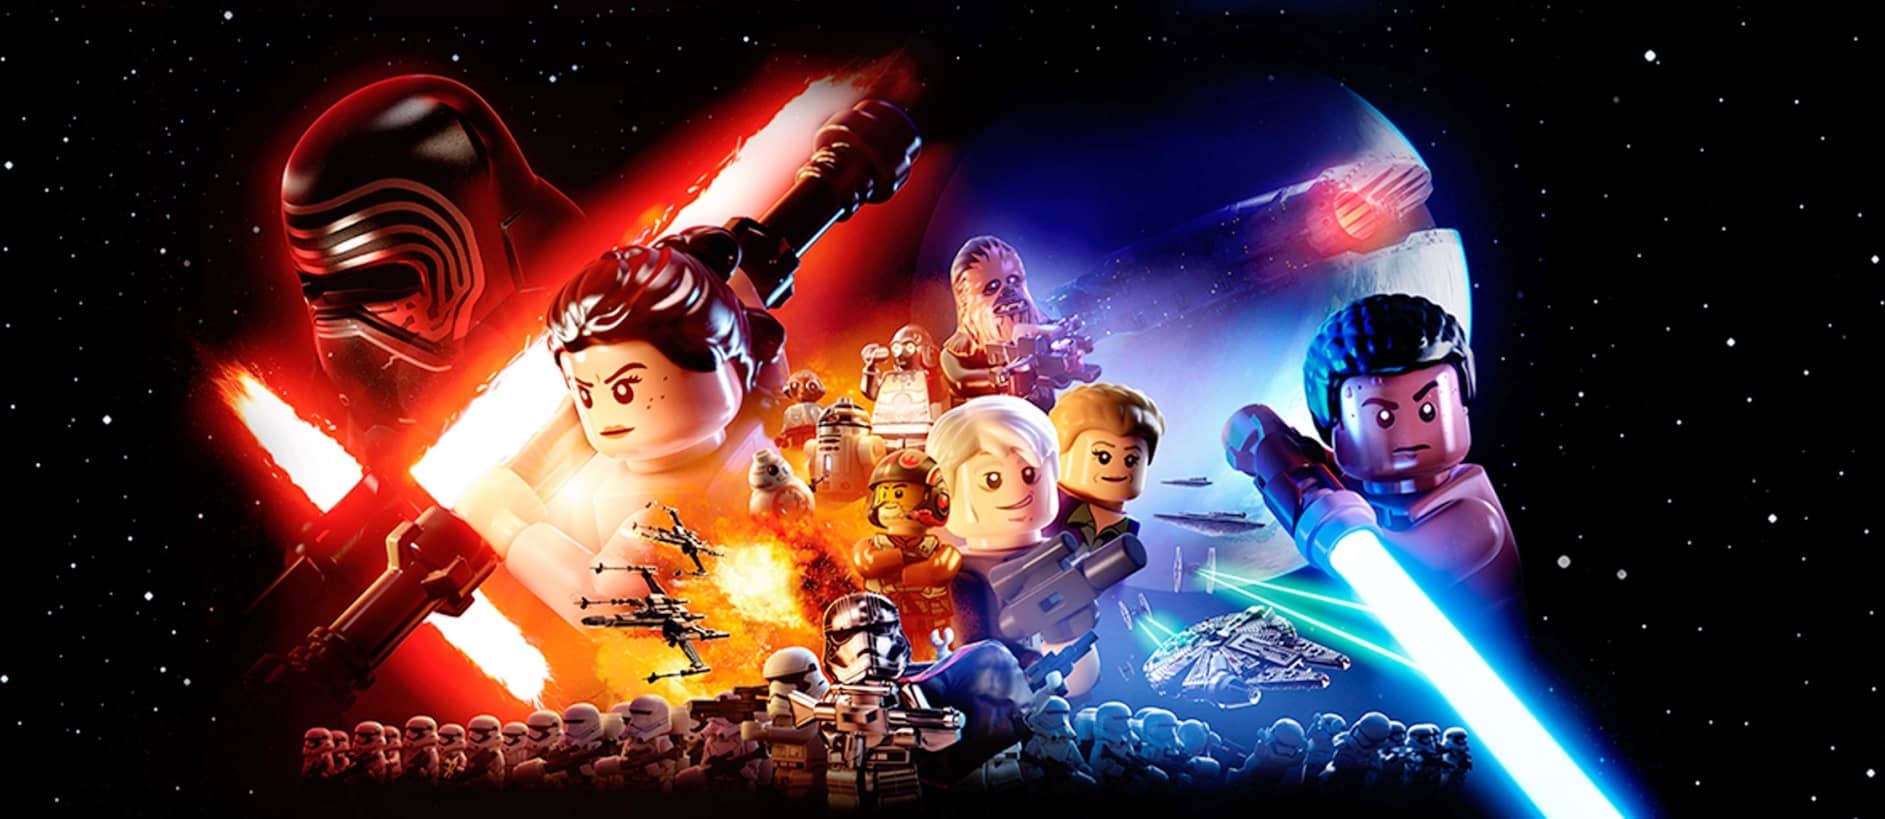 lego star wars the force awakens коды на всех персонажей